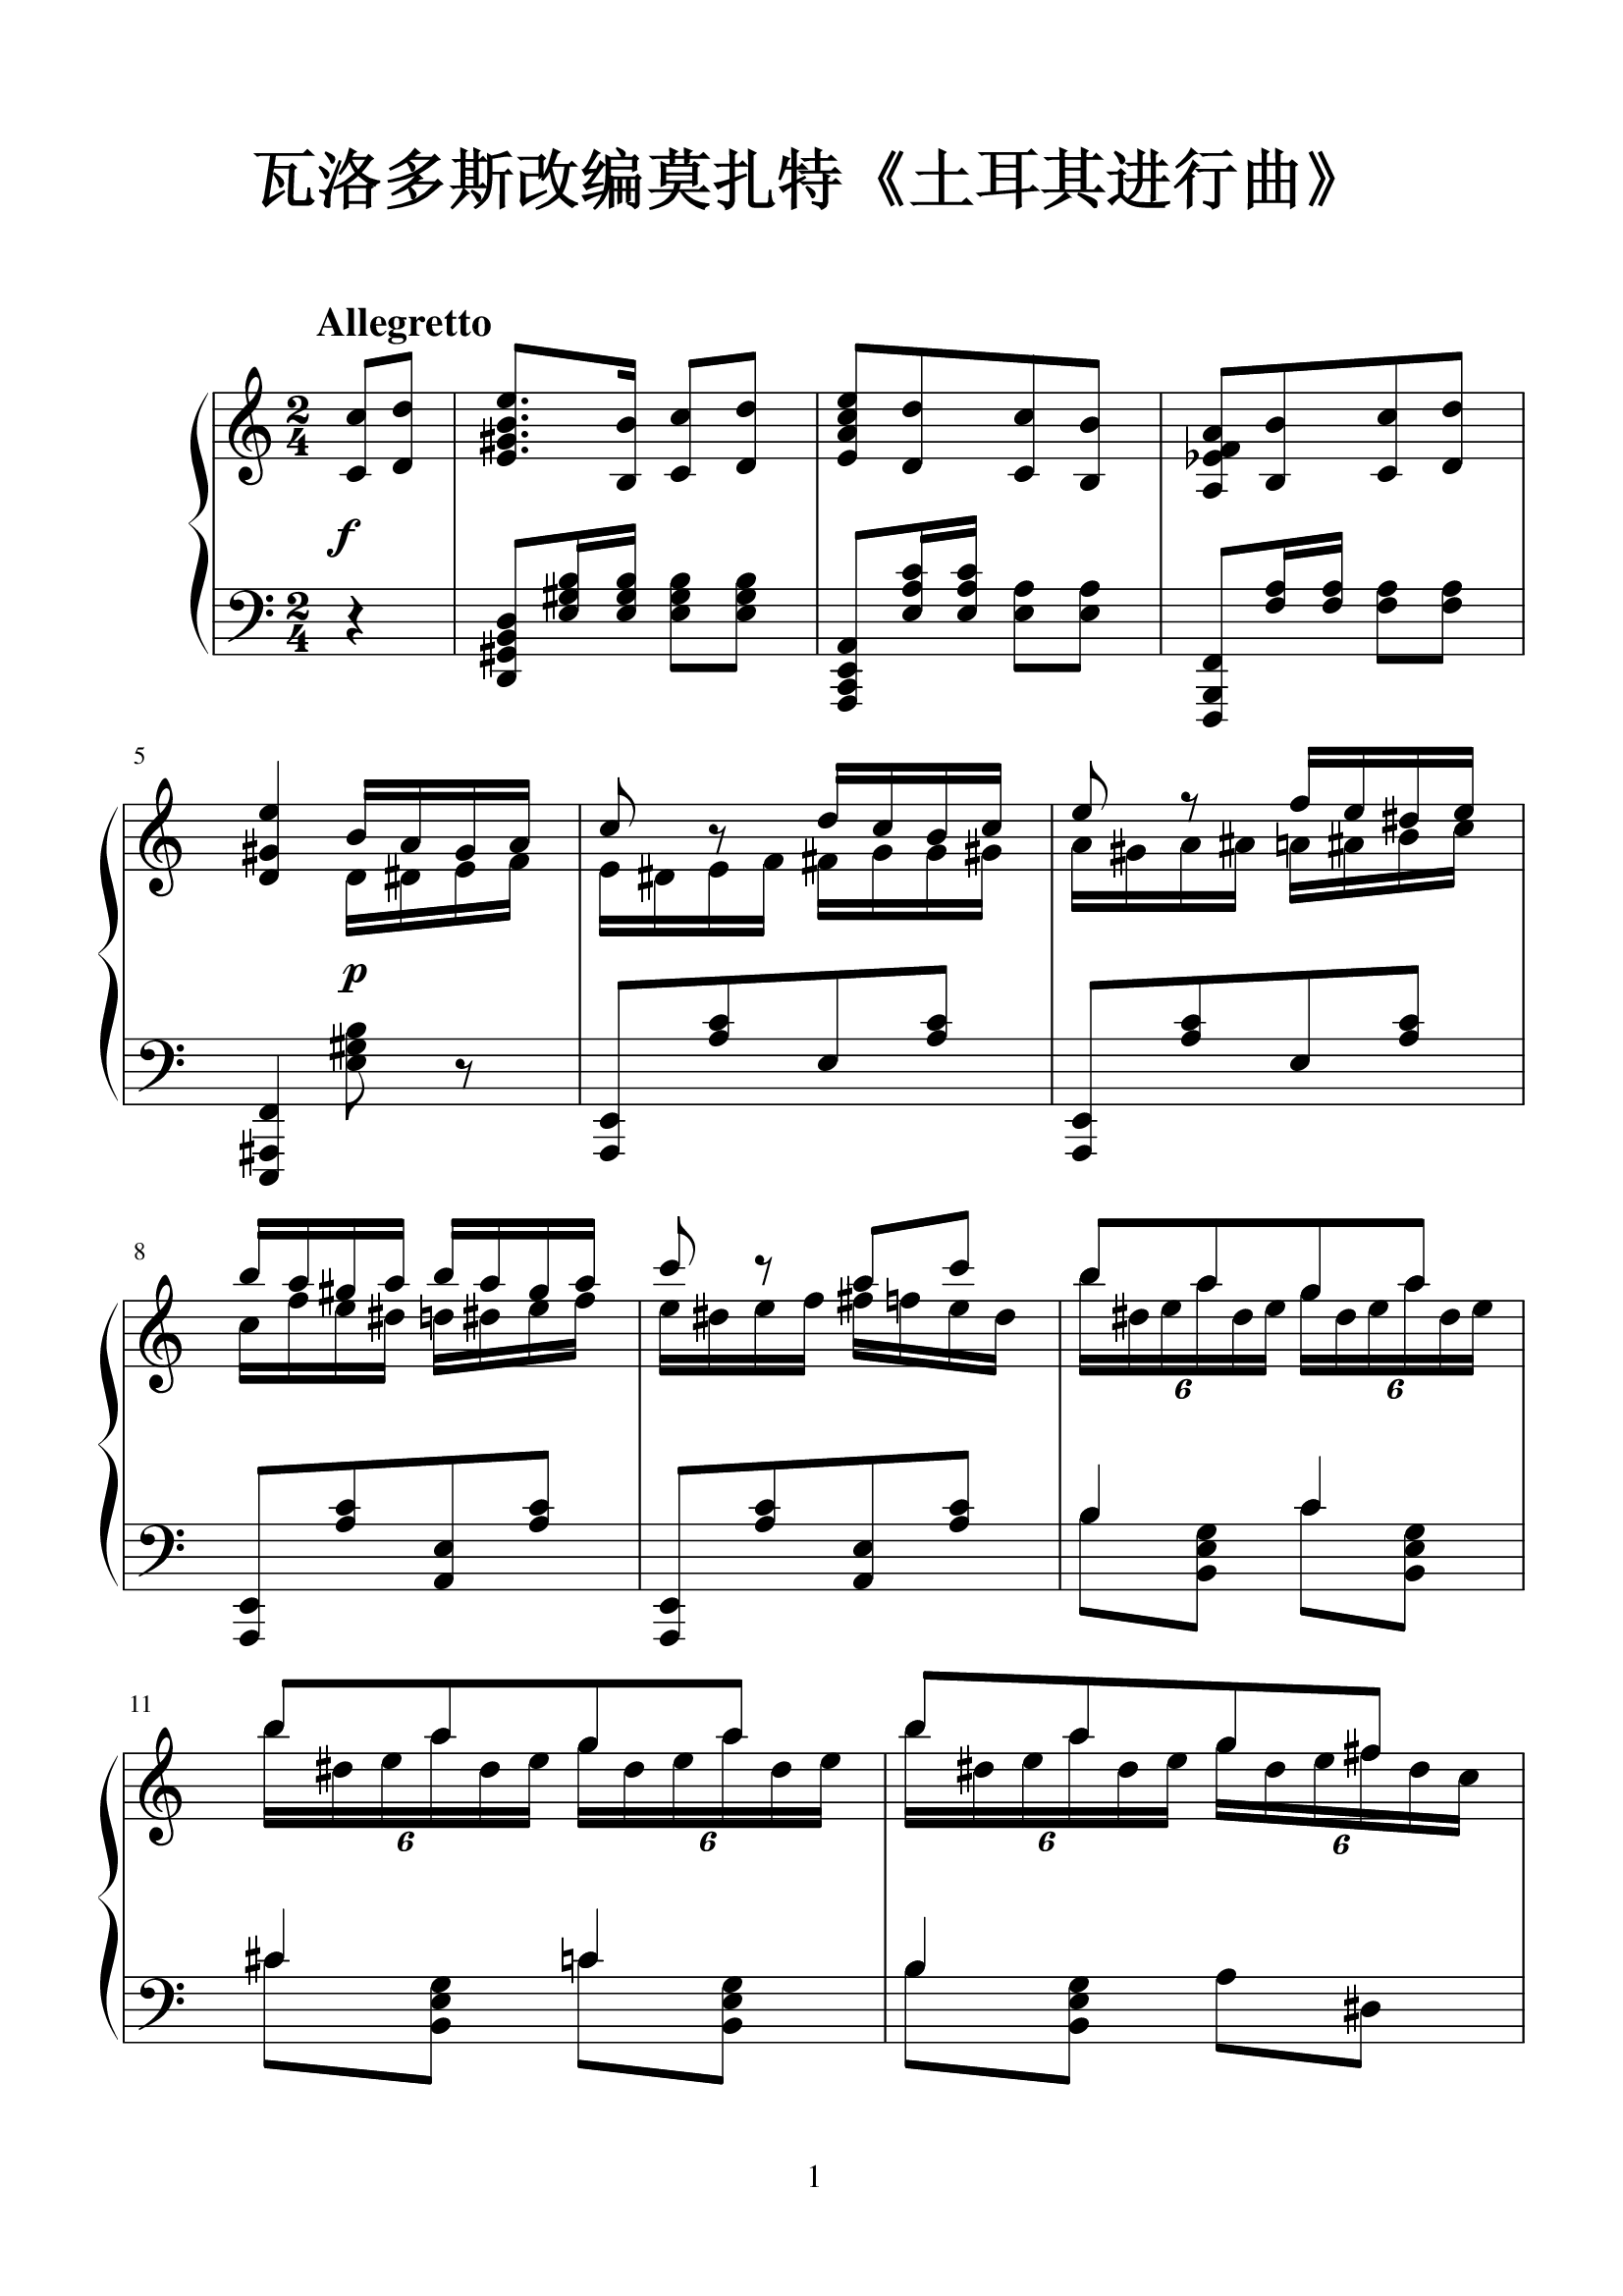 NGC-MS65 1931年奥地利音乐家莫扎特诞辰175周年纪念银章 - 首席收藏网 - 中文钱币收藏门户 - ShouXi.com ...